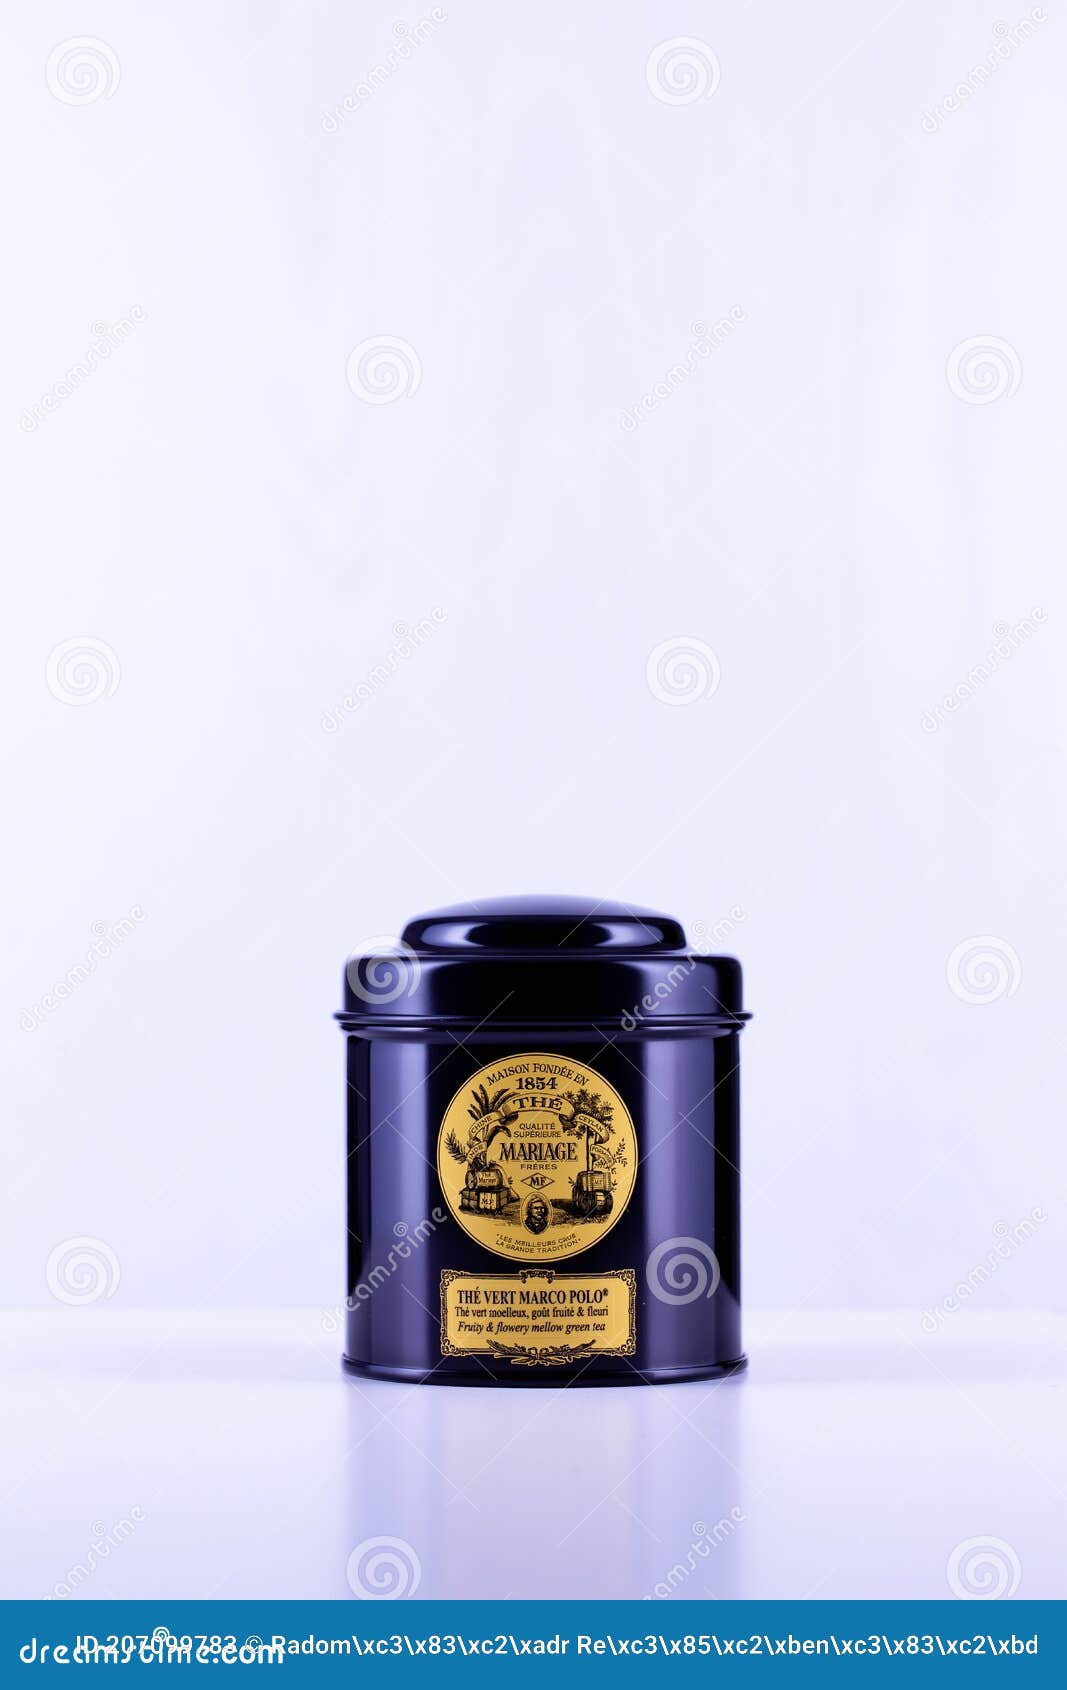 Legendary Marco Polo Tea in the Black Box Editorial Stock Photo